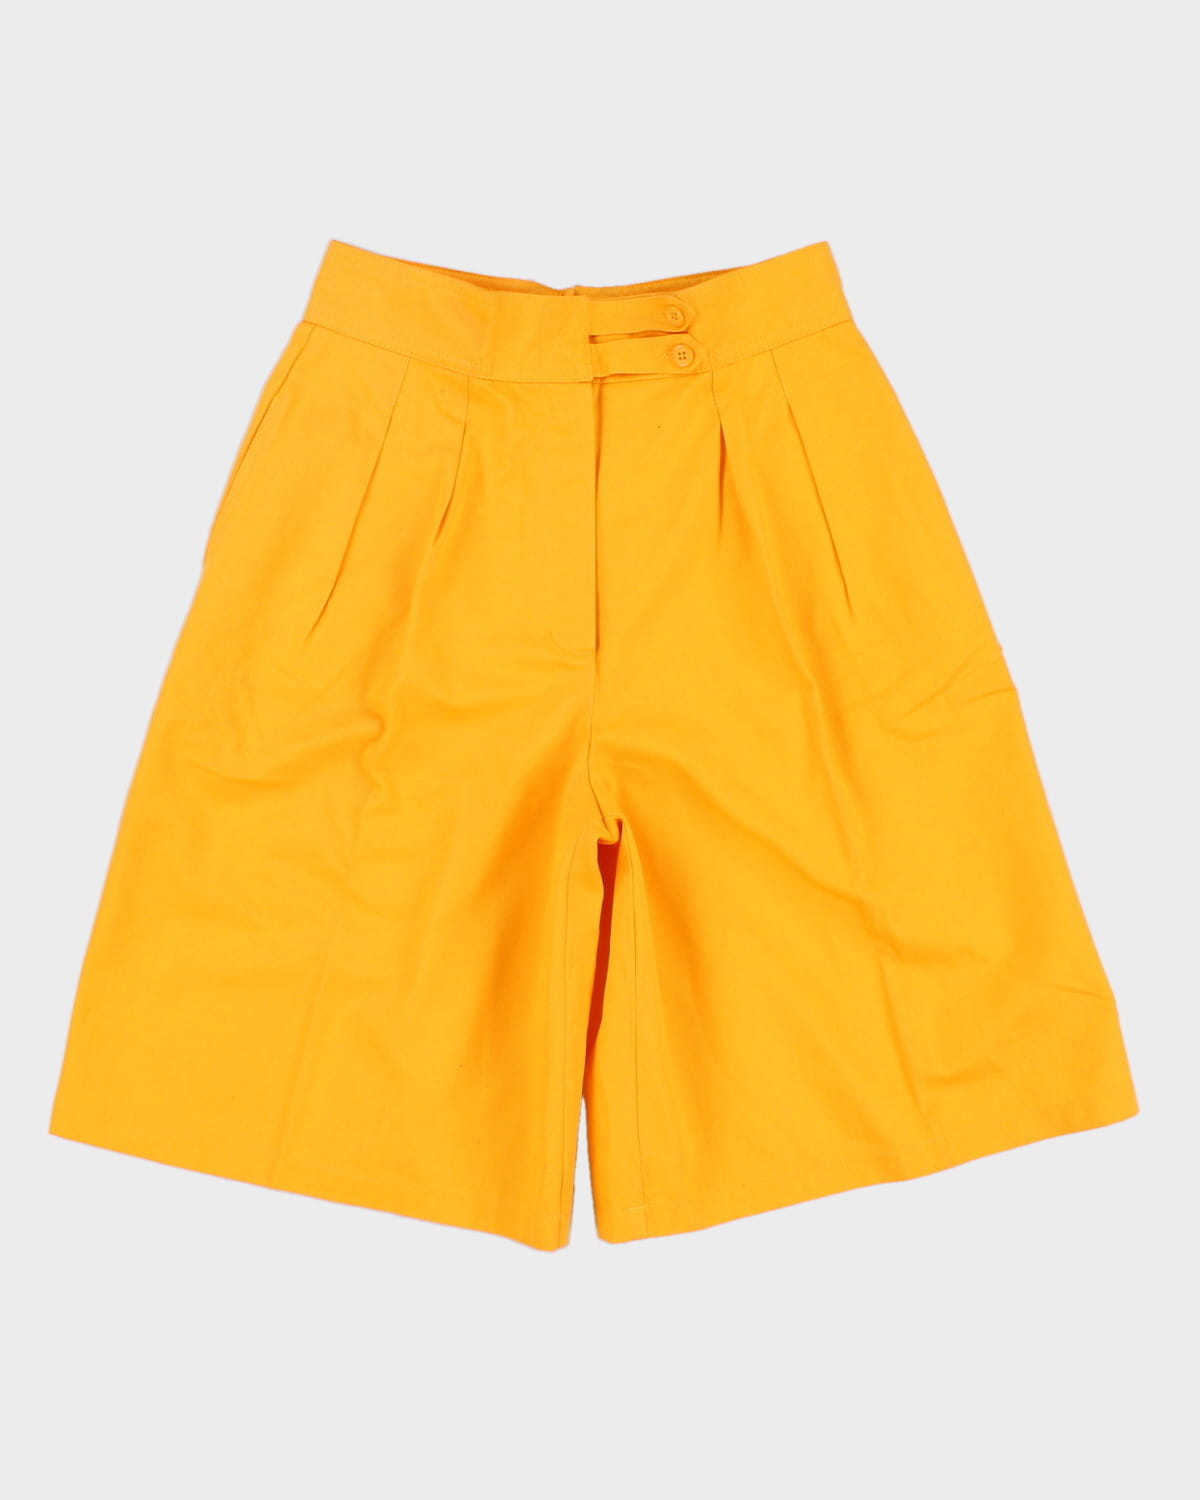 Vintage 70s Jean's West Yellow Pantaloon Shorts - M